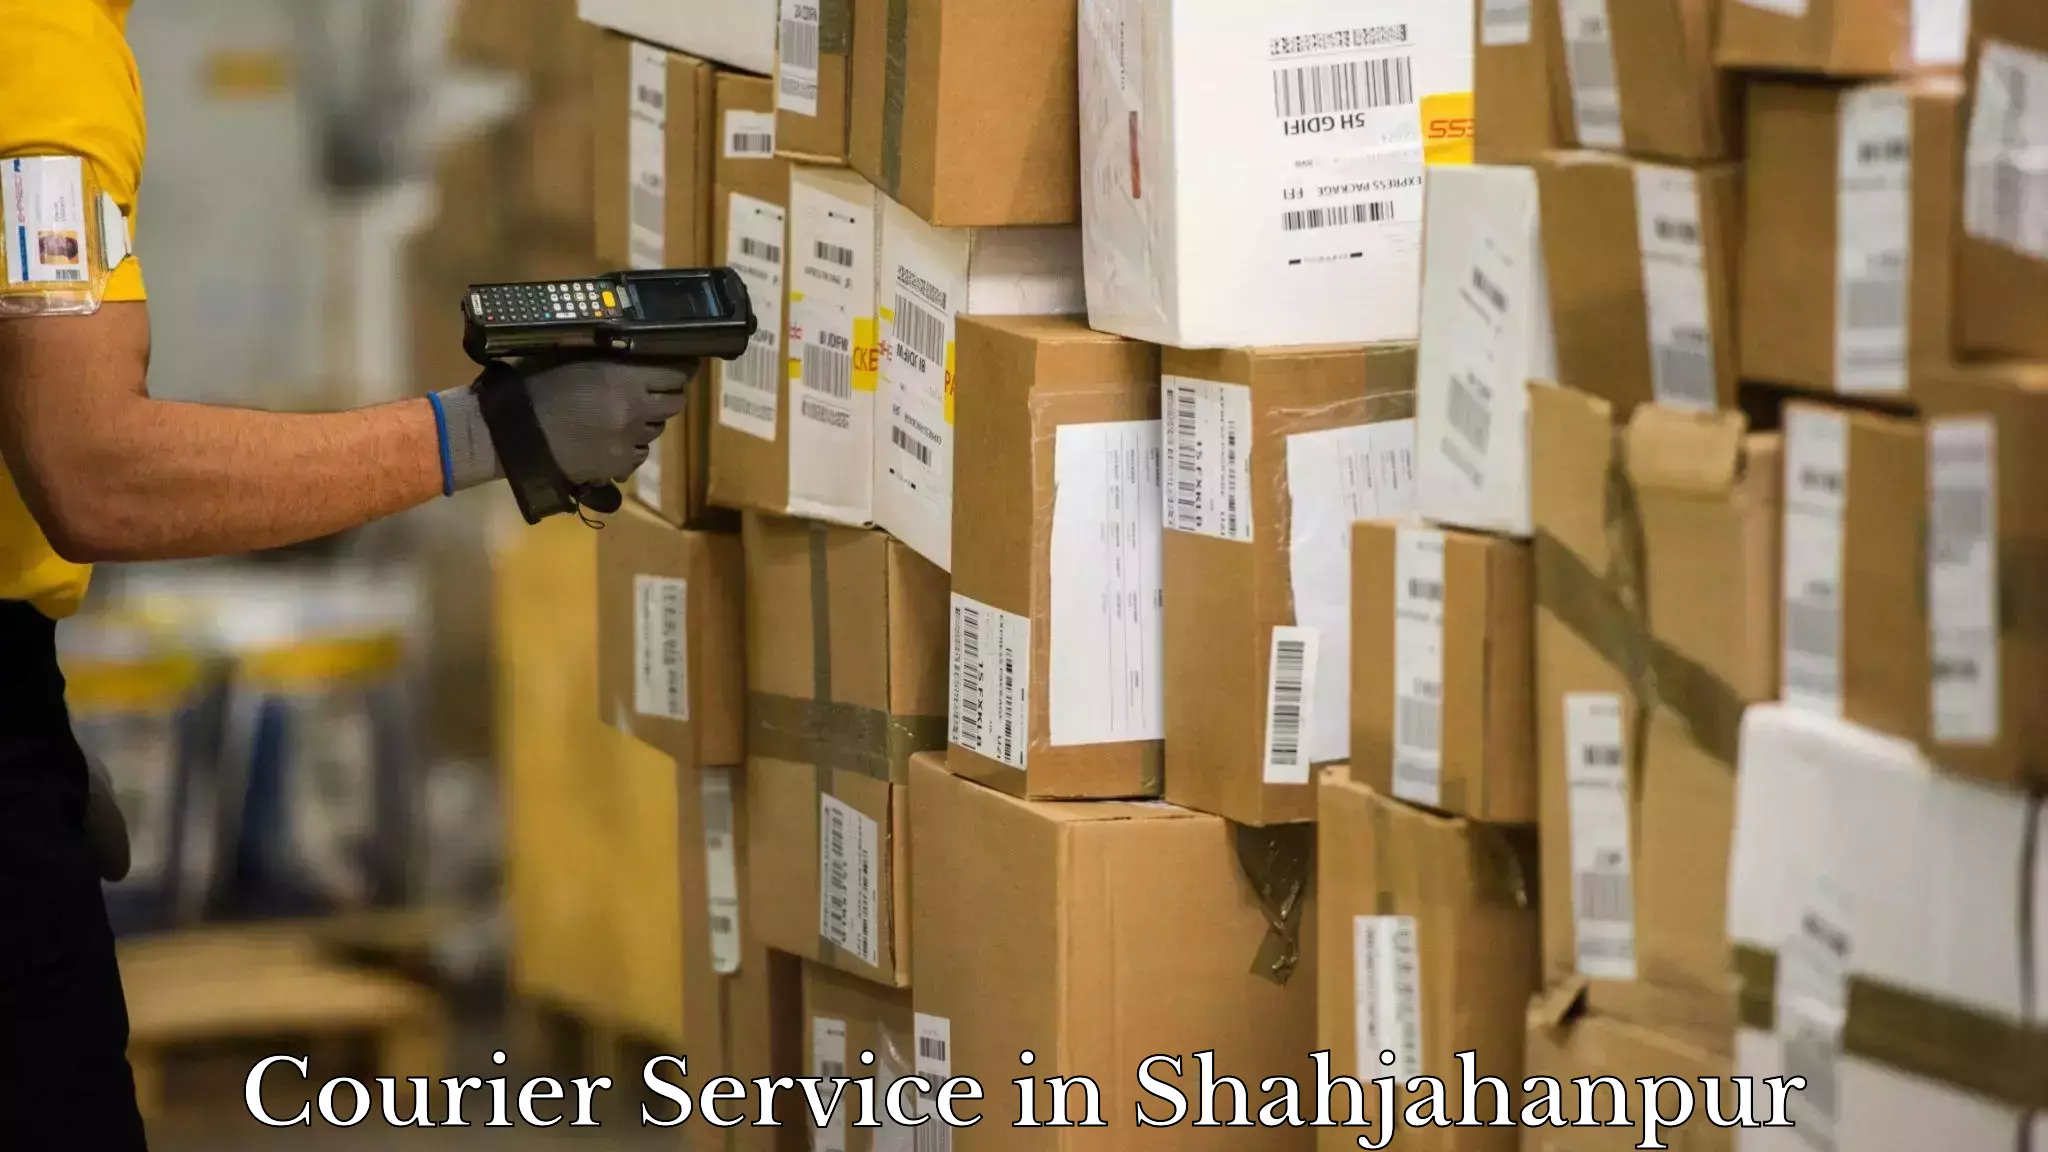 Efficient parcel service in Shahjahanpur